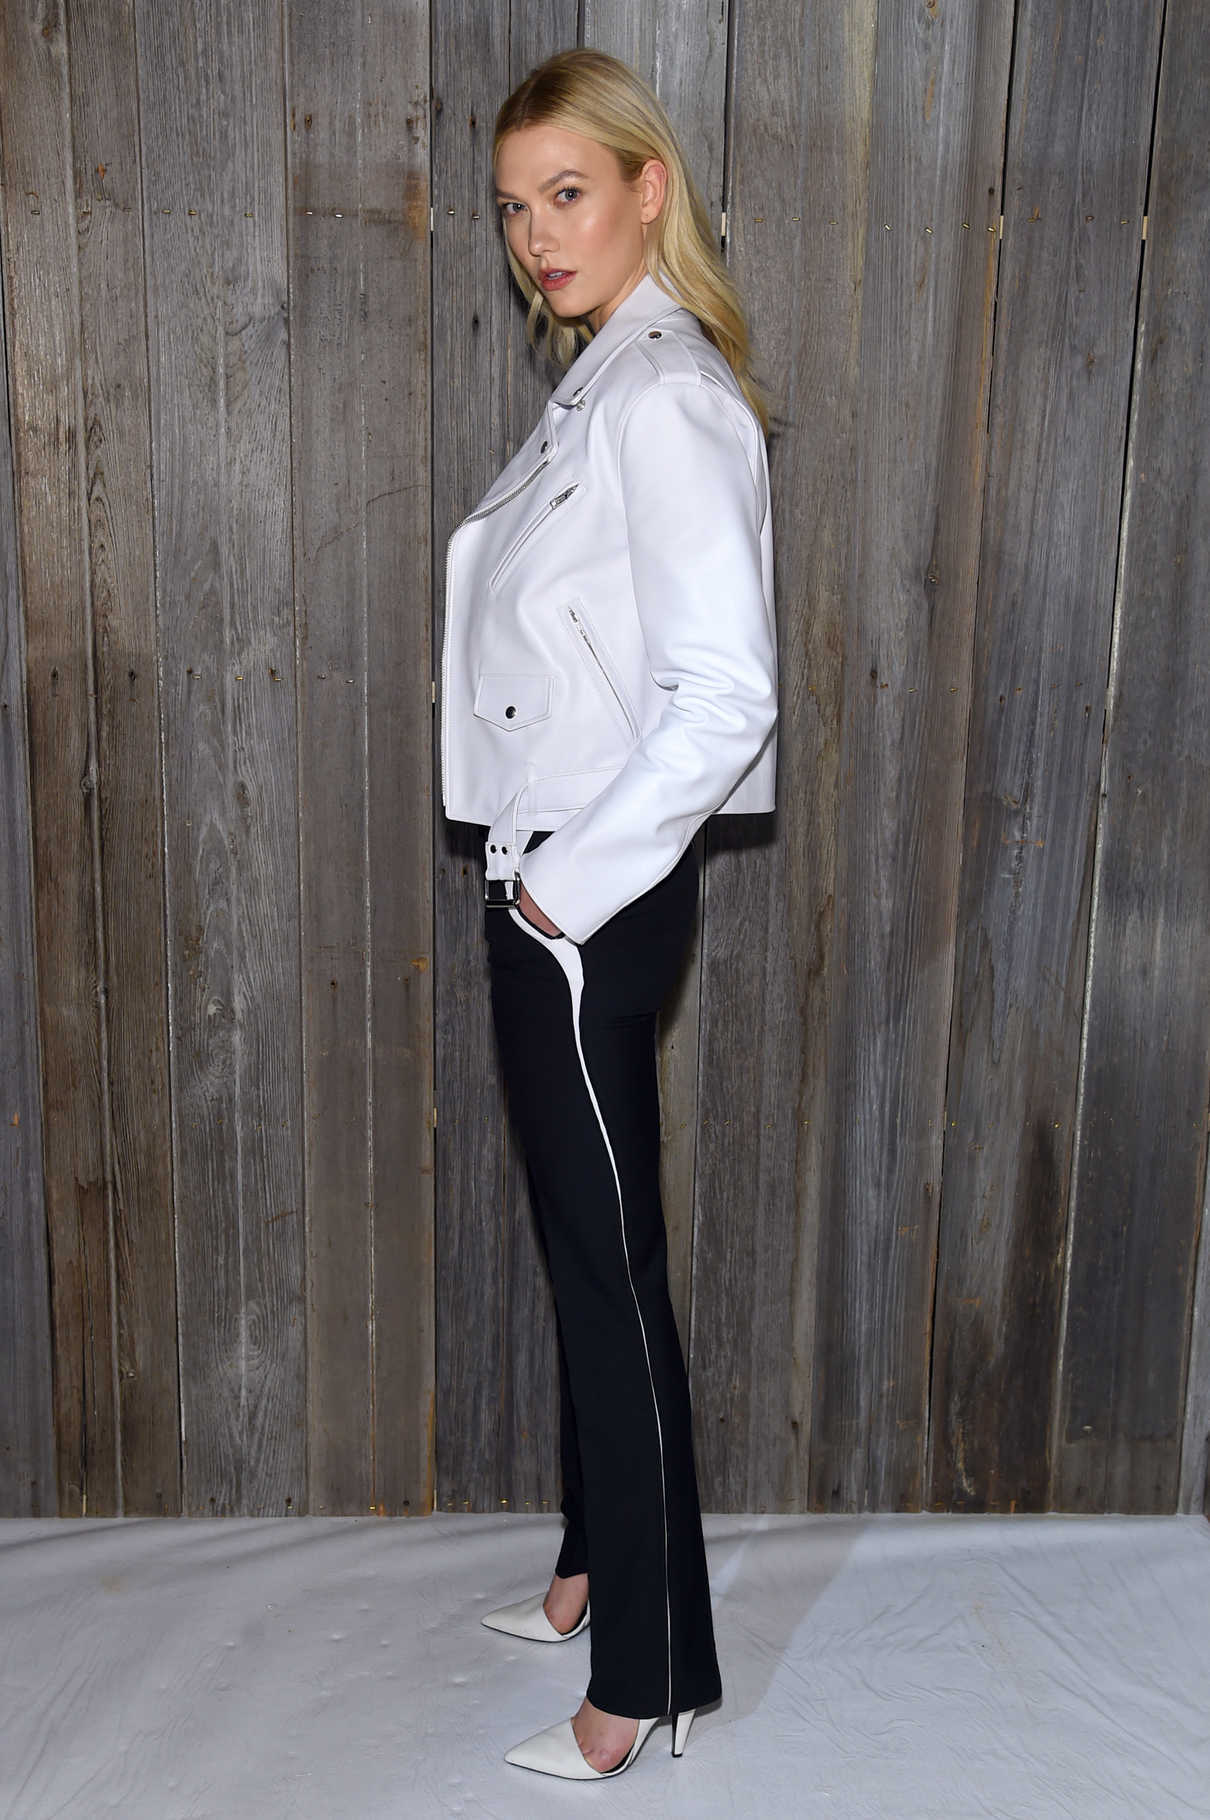 Karlie Kloss at the Calvin Klein Fashion Show During New York Fashion ...